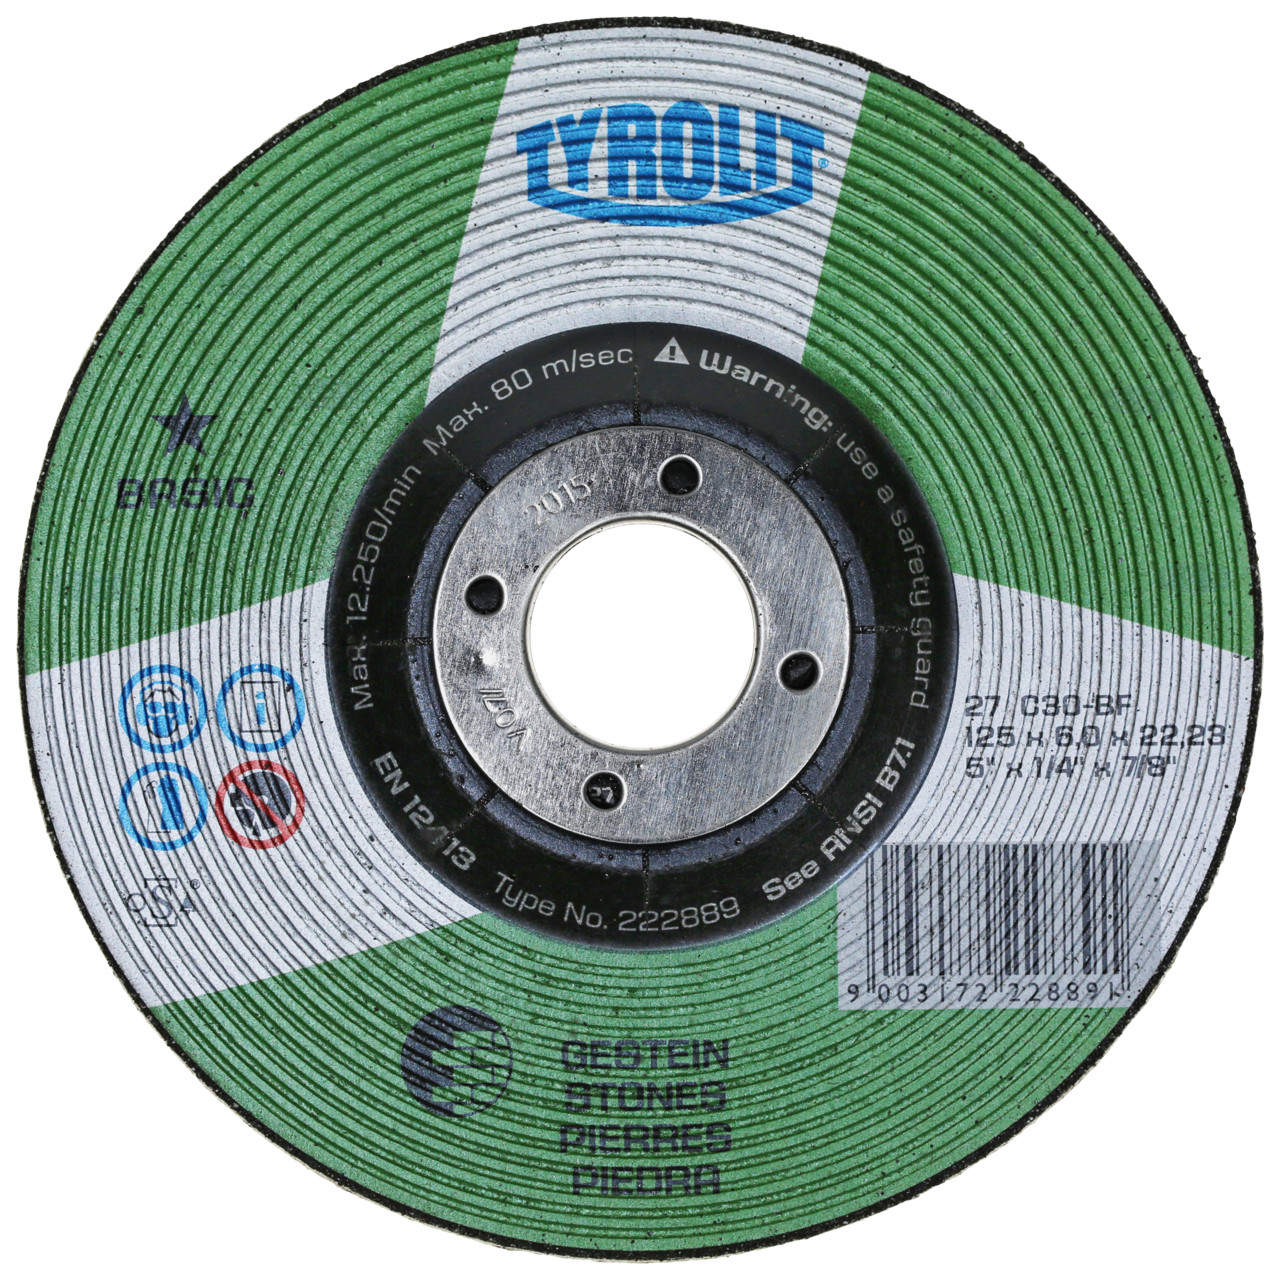 TYROLIT grinding wheel DxUxH 115x6x22.23 For stone, shape: 27 - offset version, Art. 222873